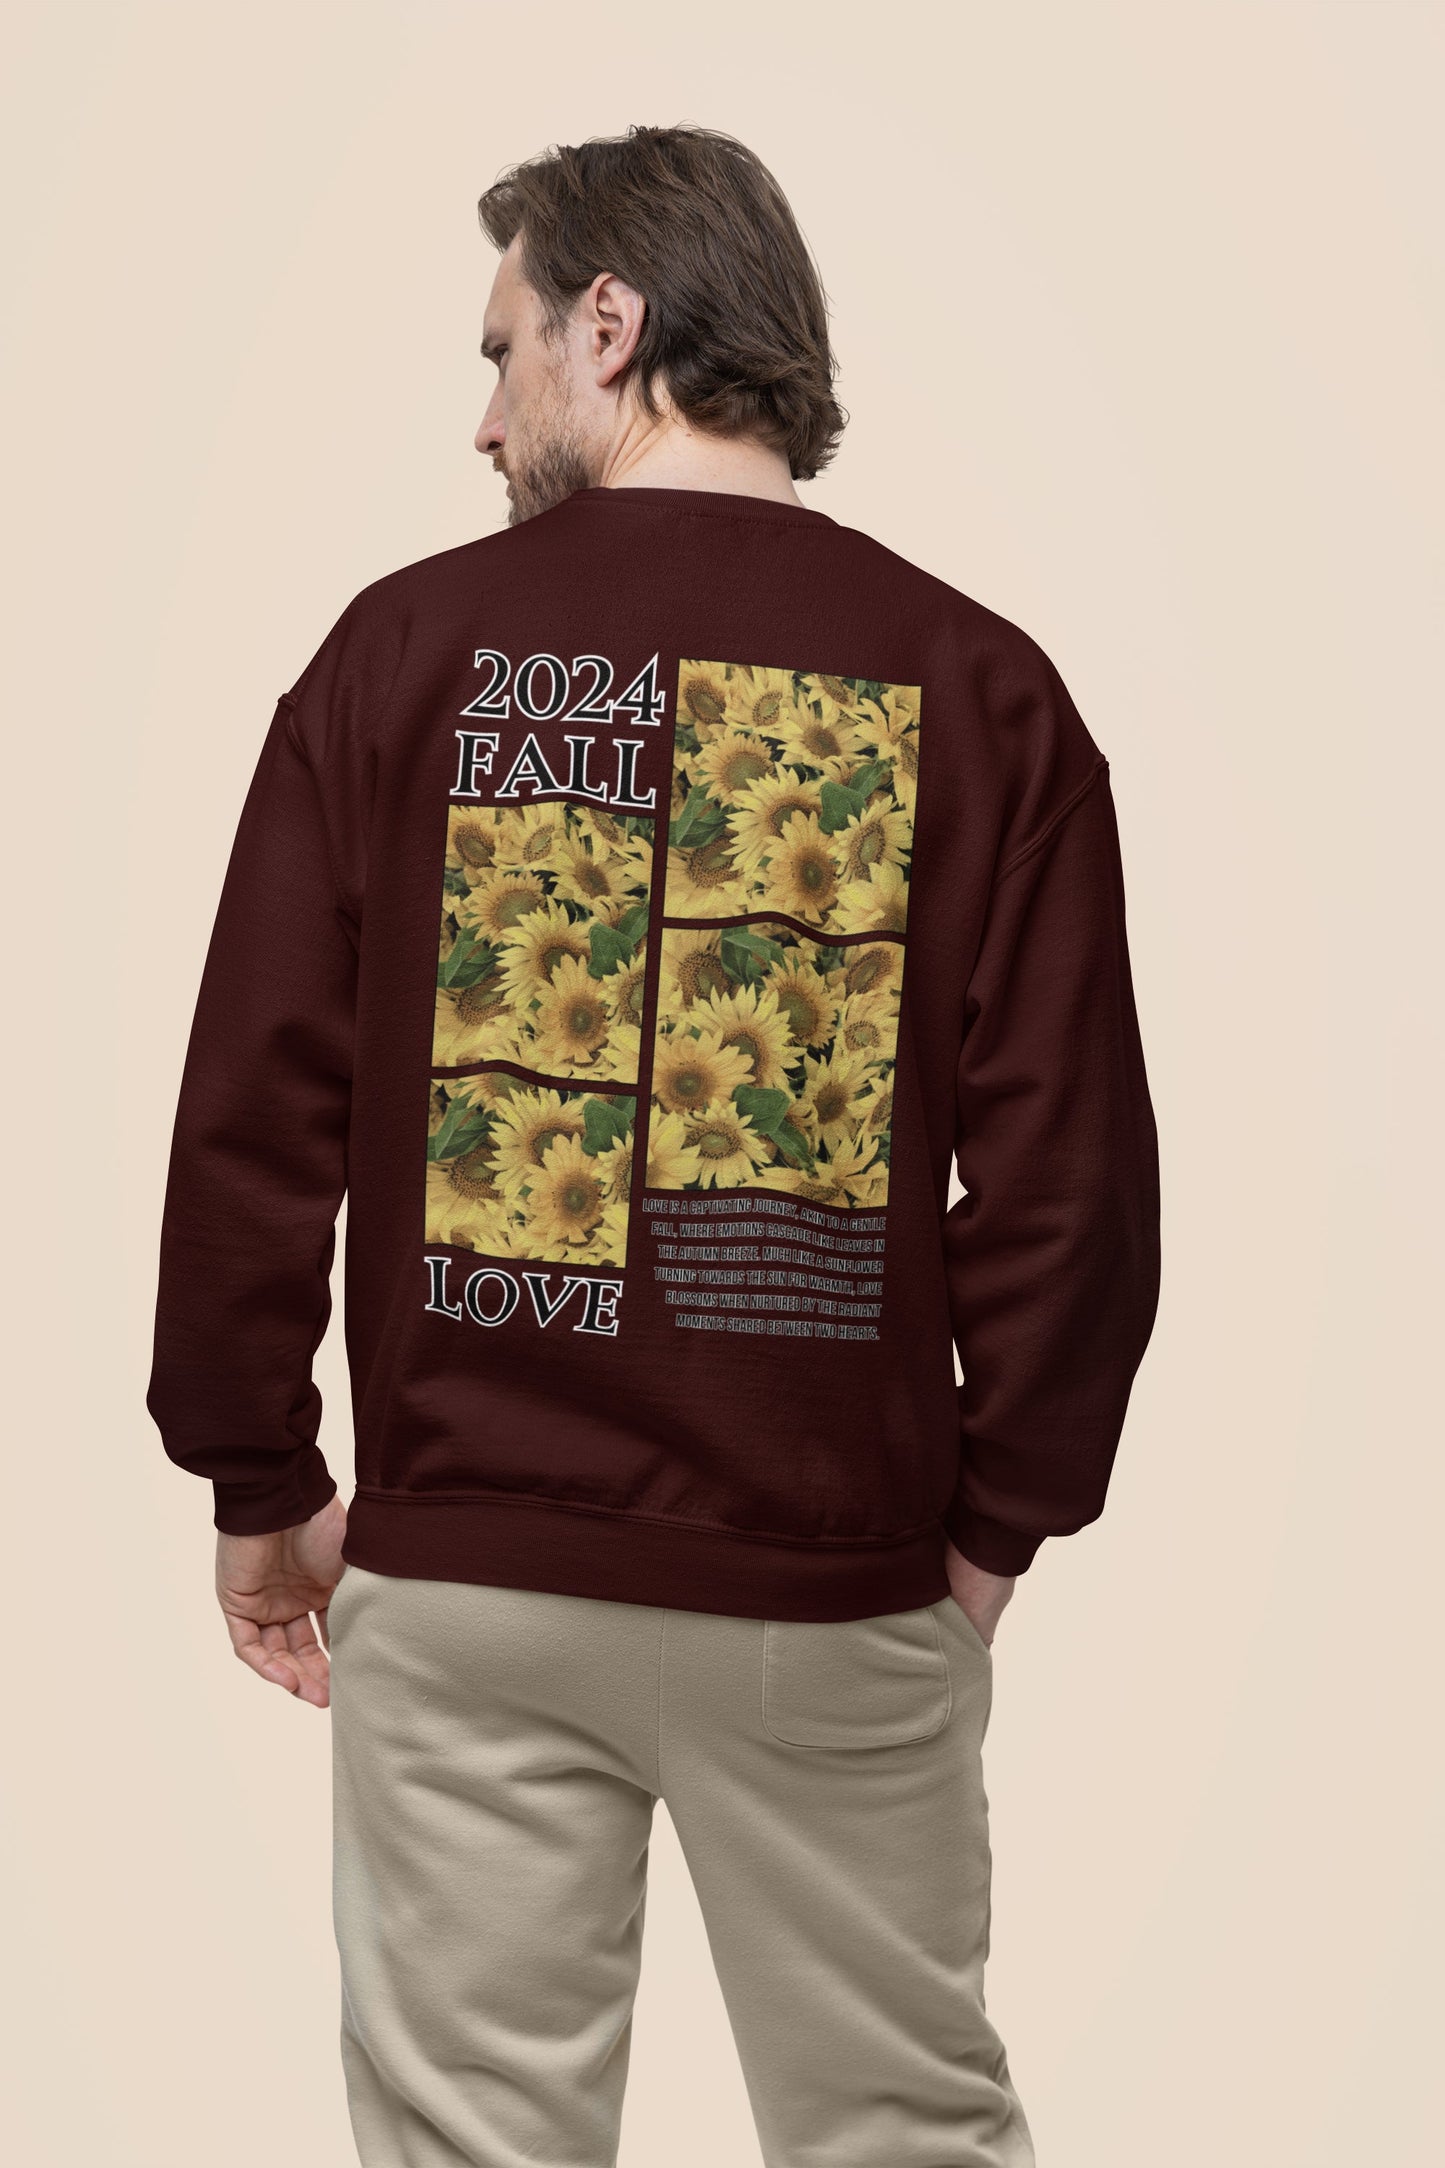 2024 Fall Love Unisex Sweatshirt